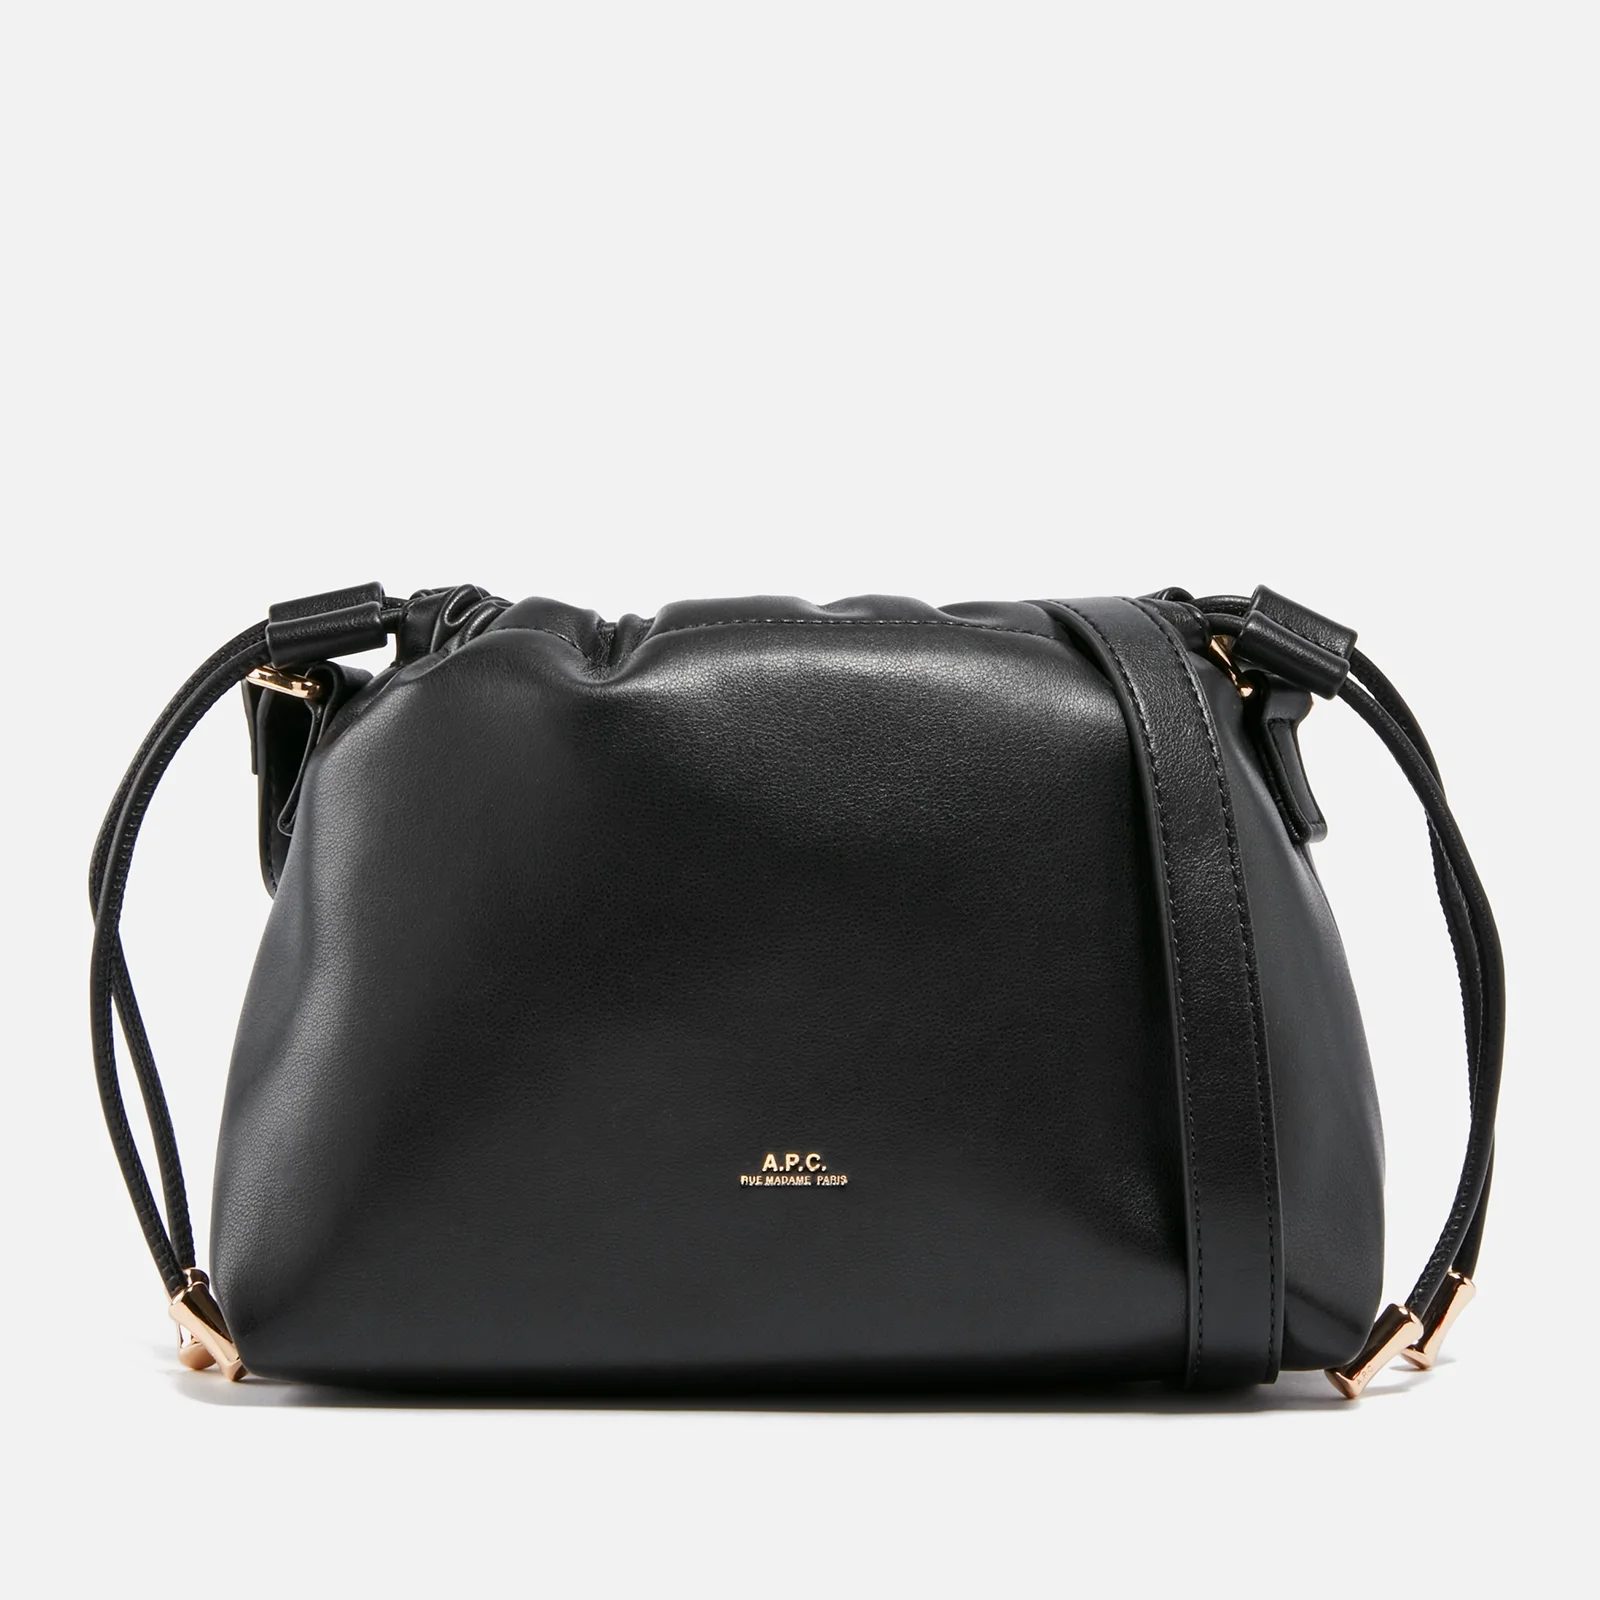 A.P.C. Ninon Mini Leather Crossbody Bag Image 1